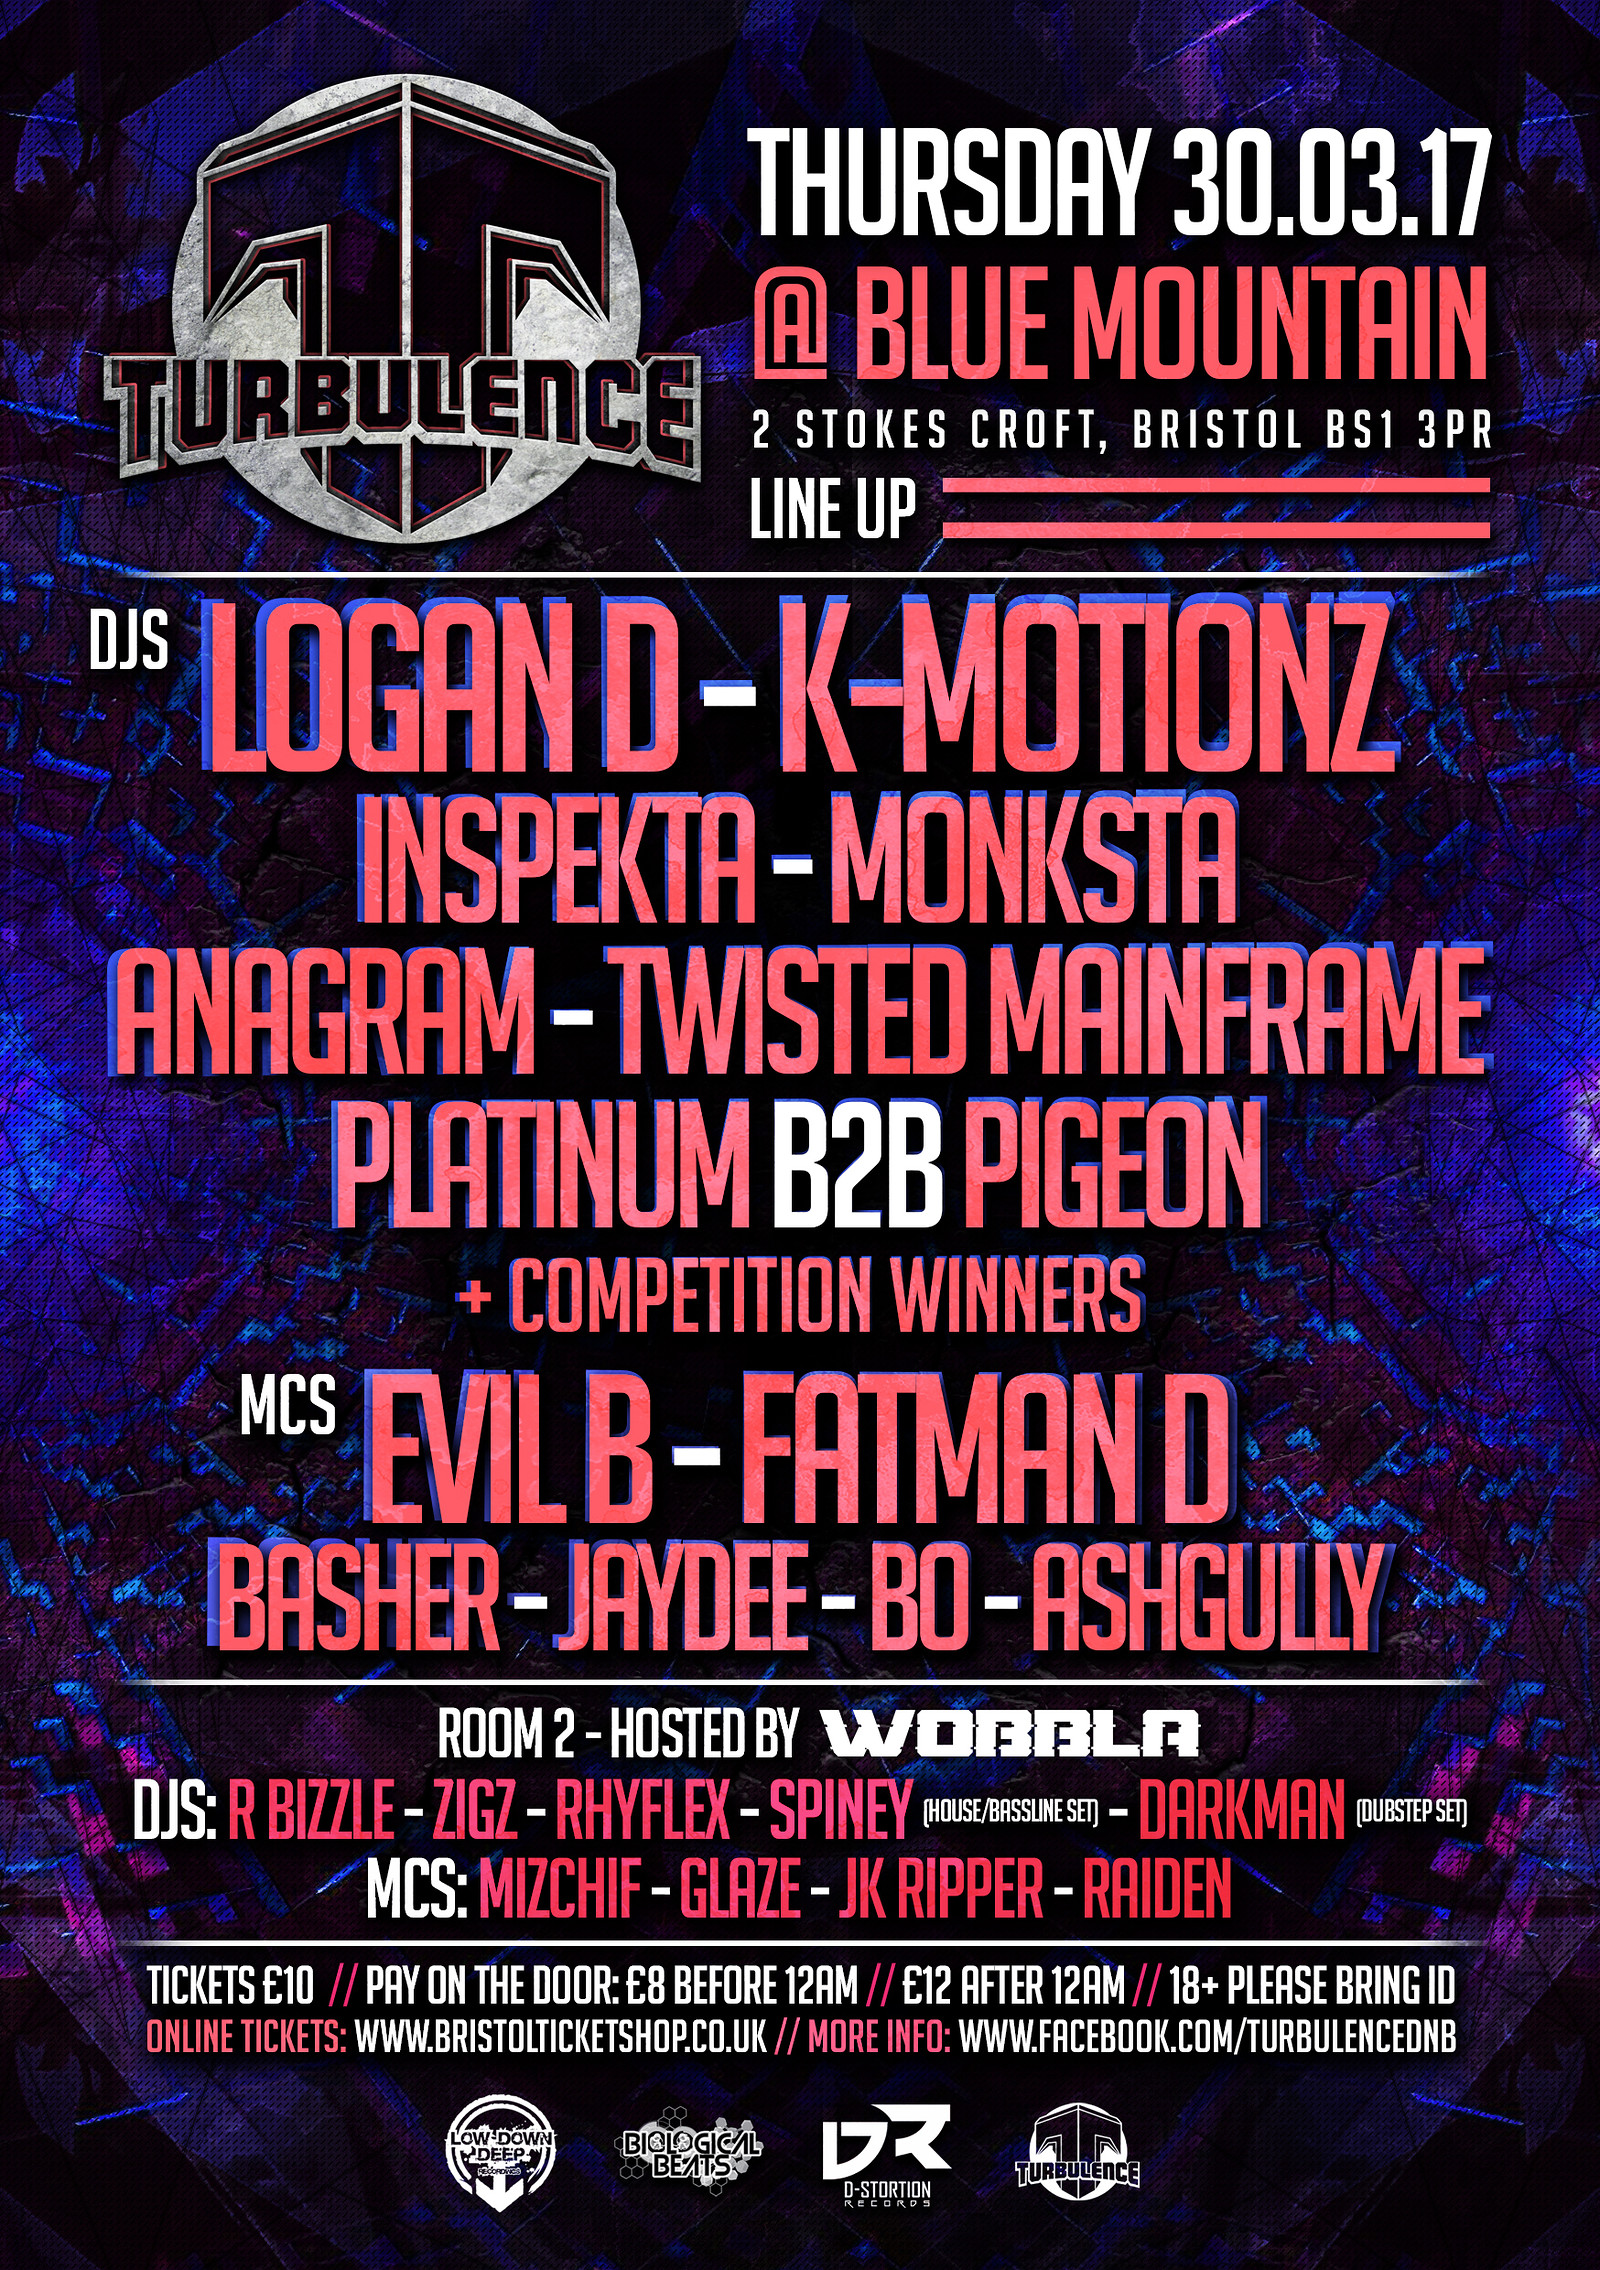 Turbulence DnB LoganD+EvilB-Kmotionz+FatmanD at Blue Mountain